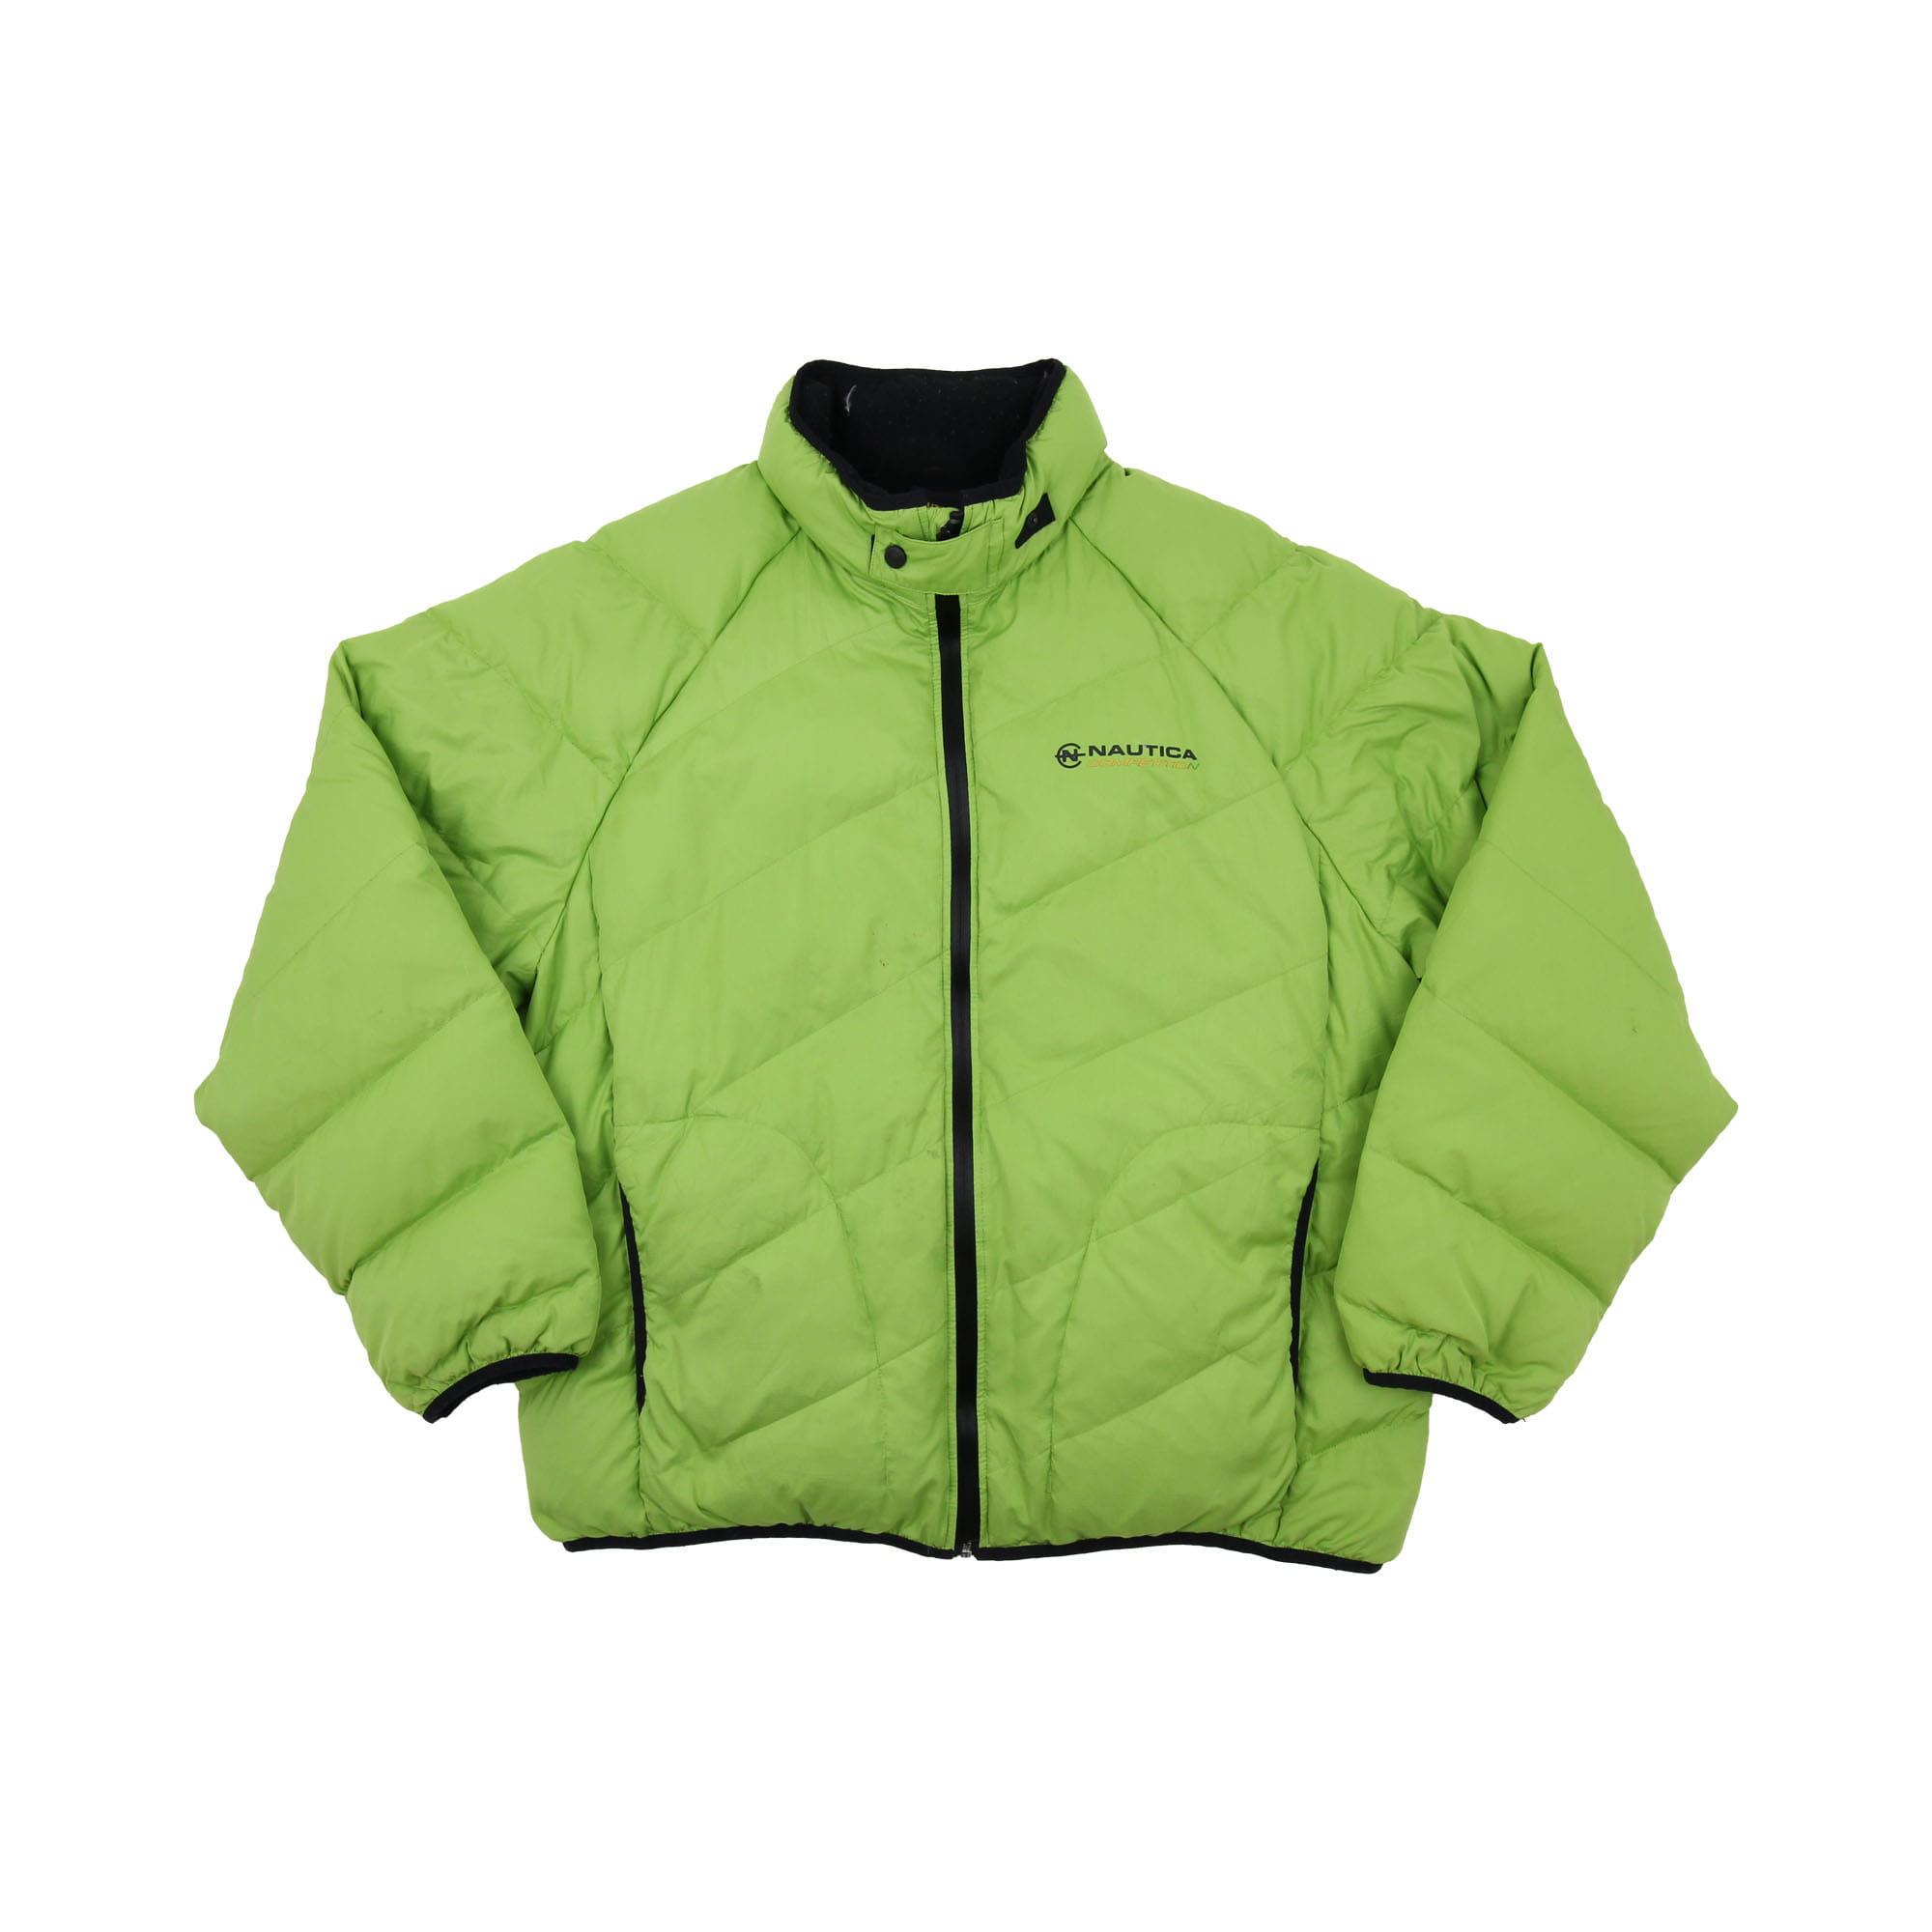 Nautica Puffer Jacket Green -  XL